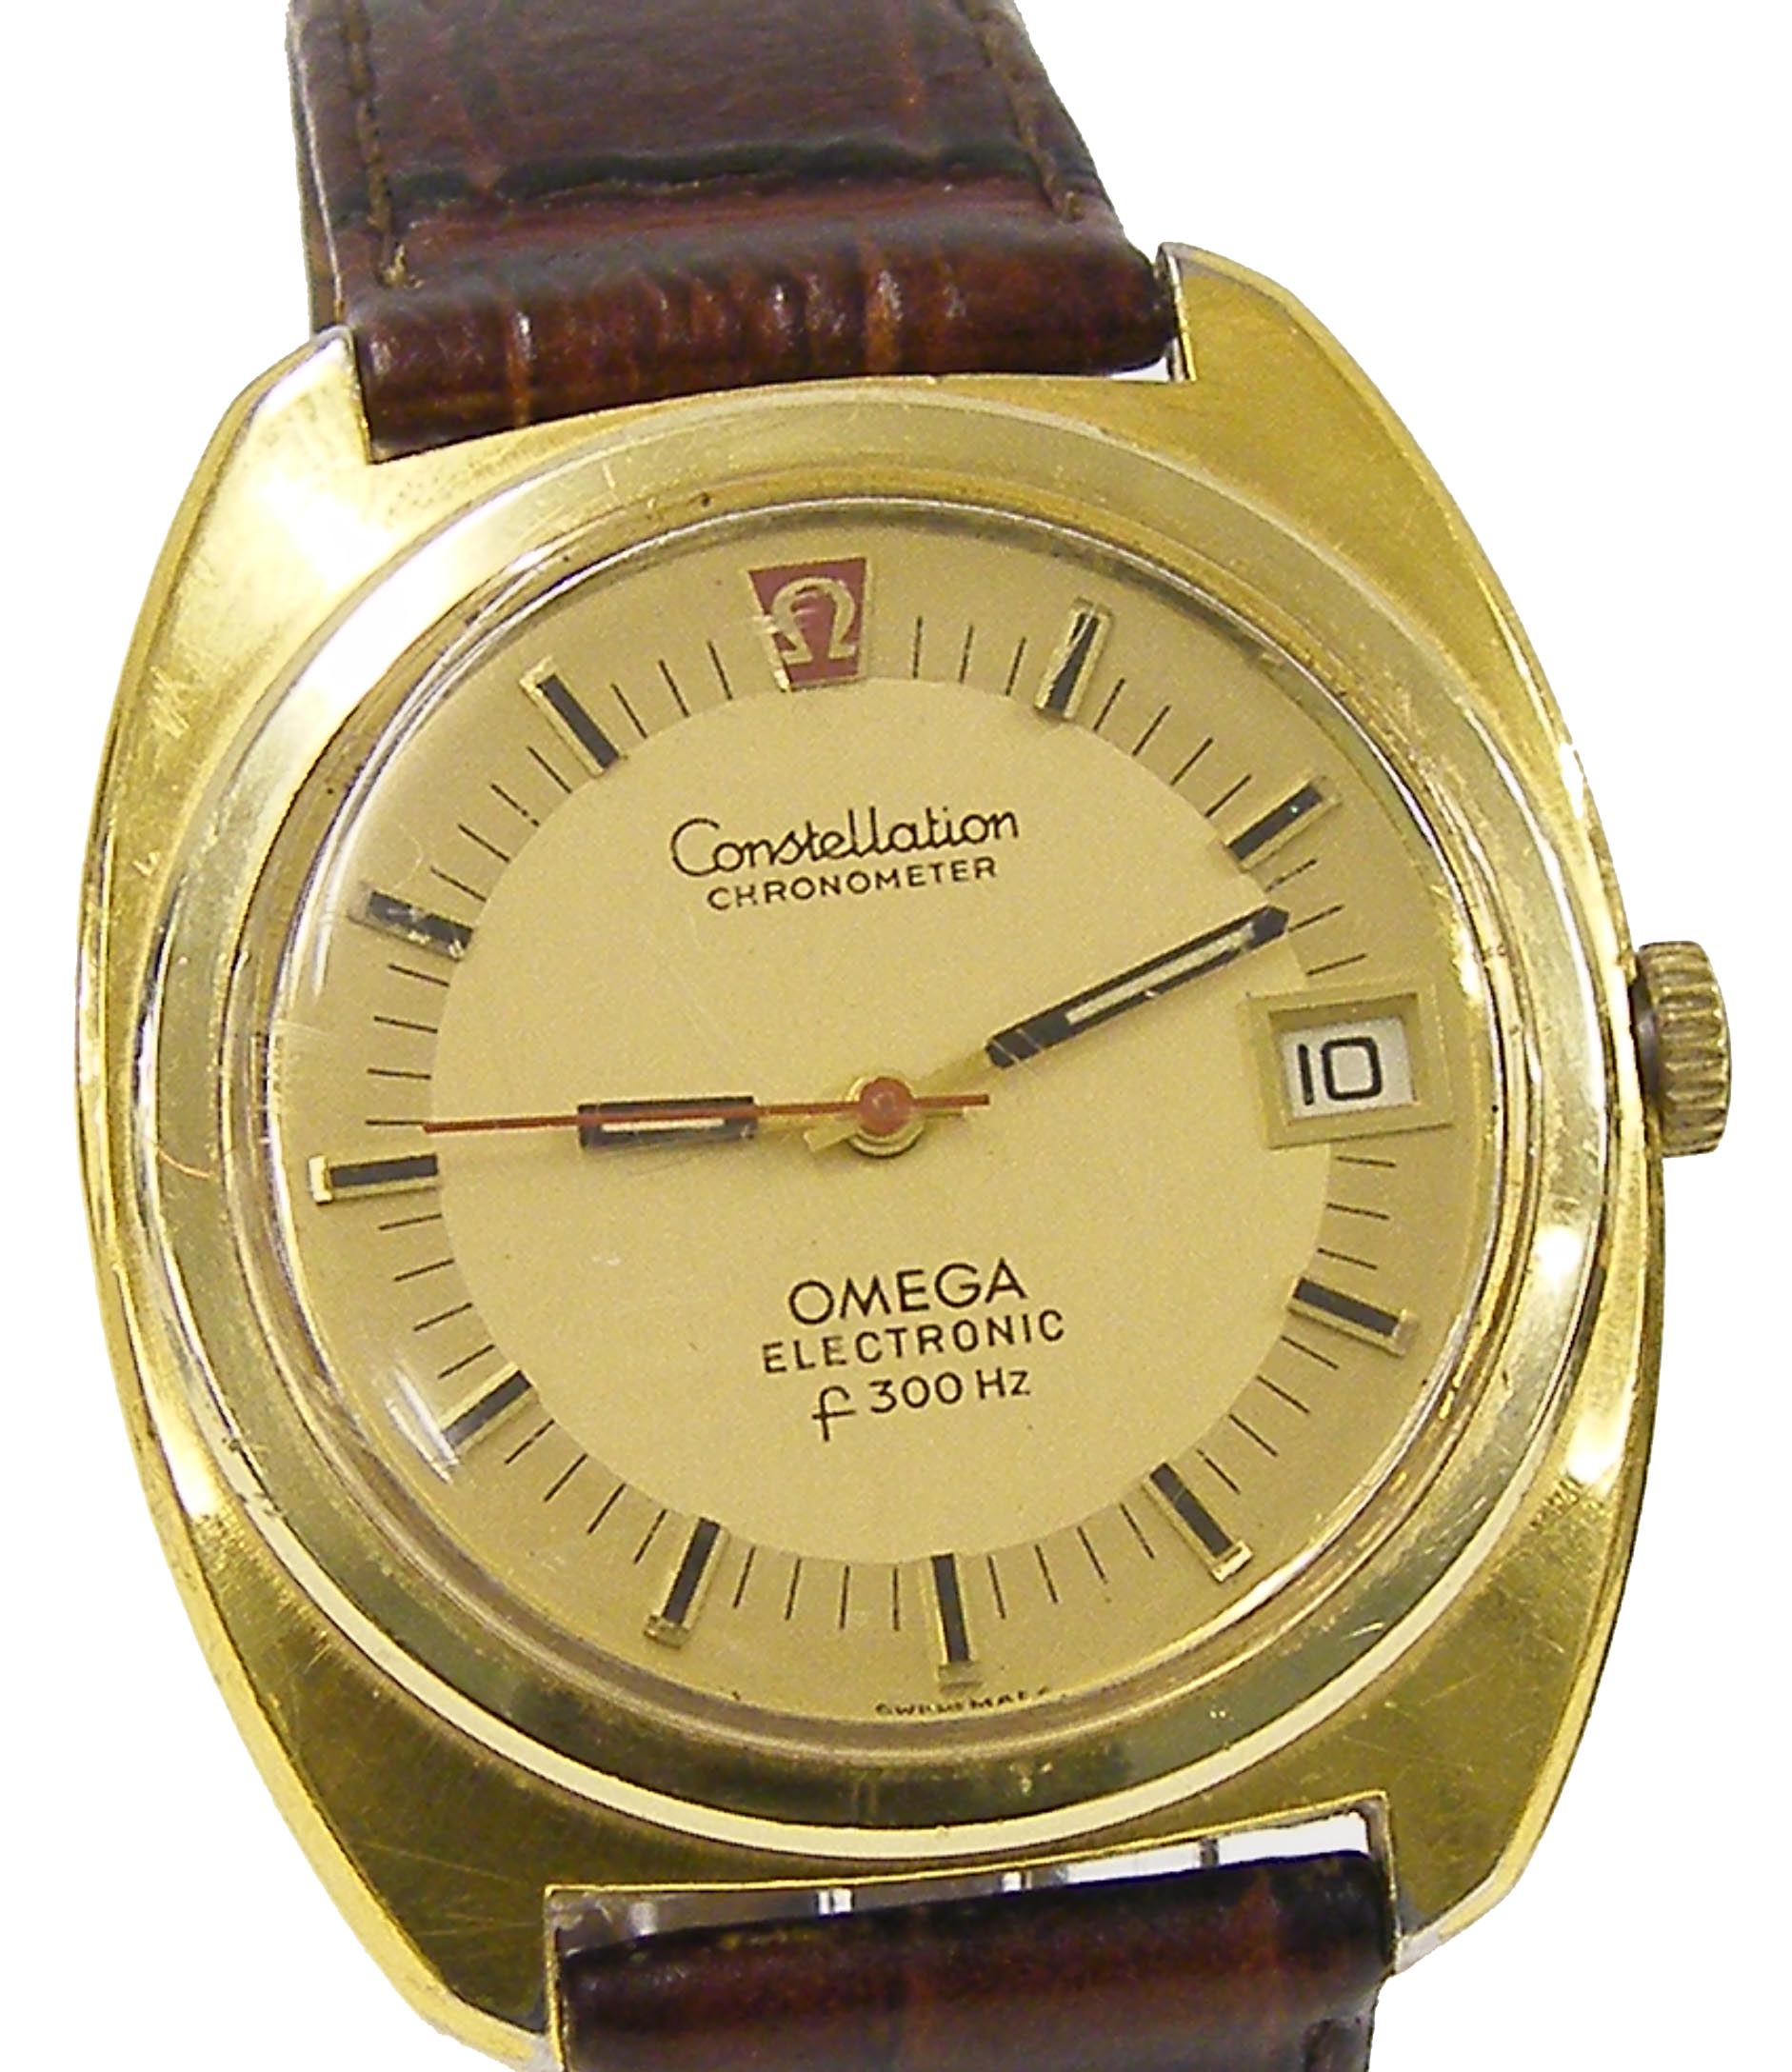 Omega Constellation Chronometer Electronic F300Hz gold plated gentleman`s wristwatch, circa 1972,